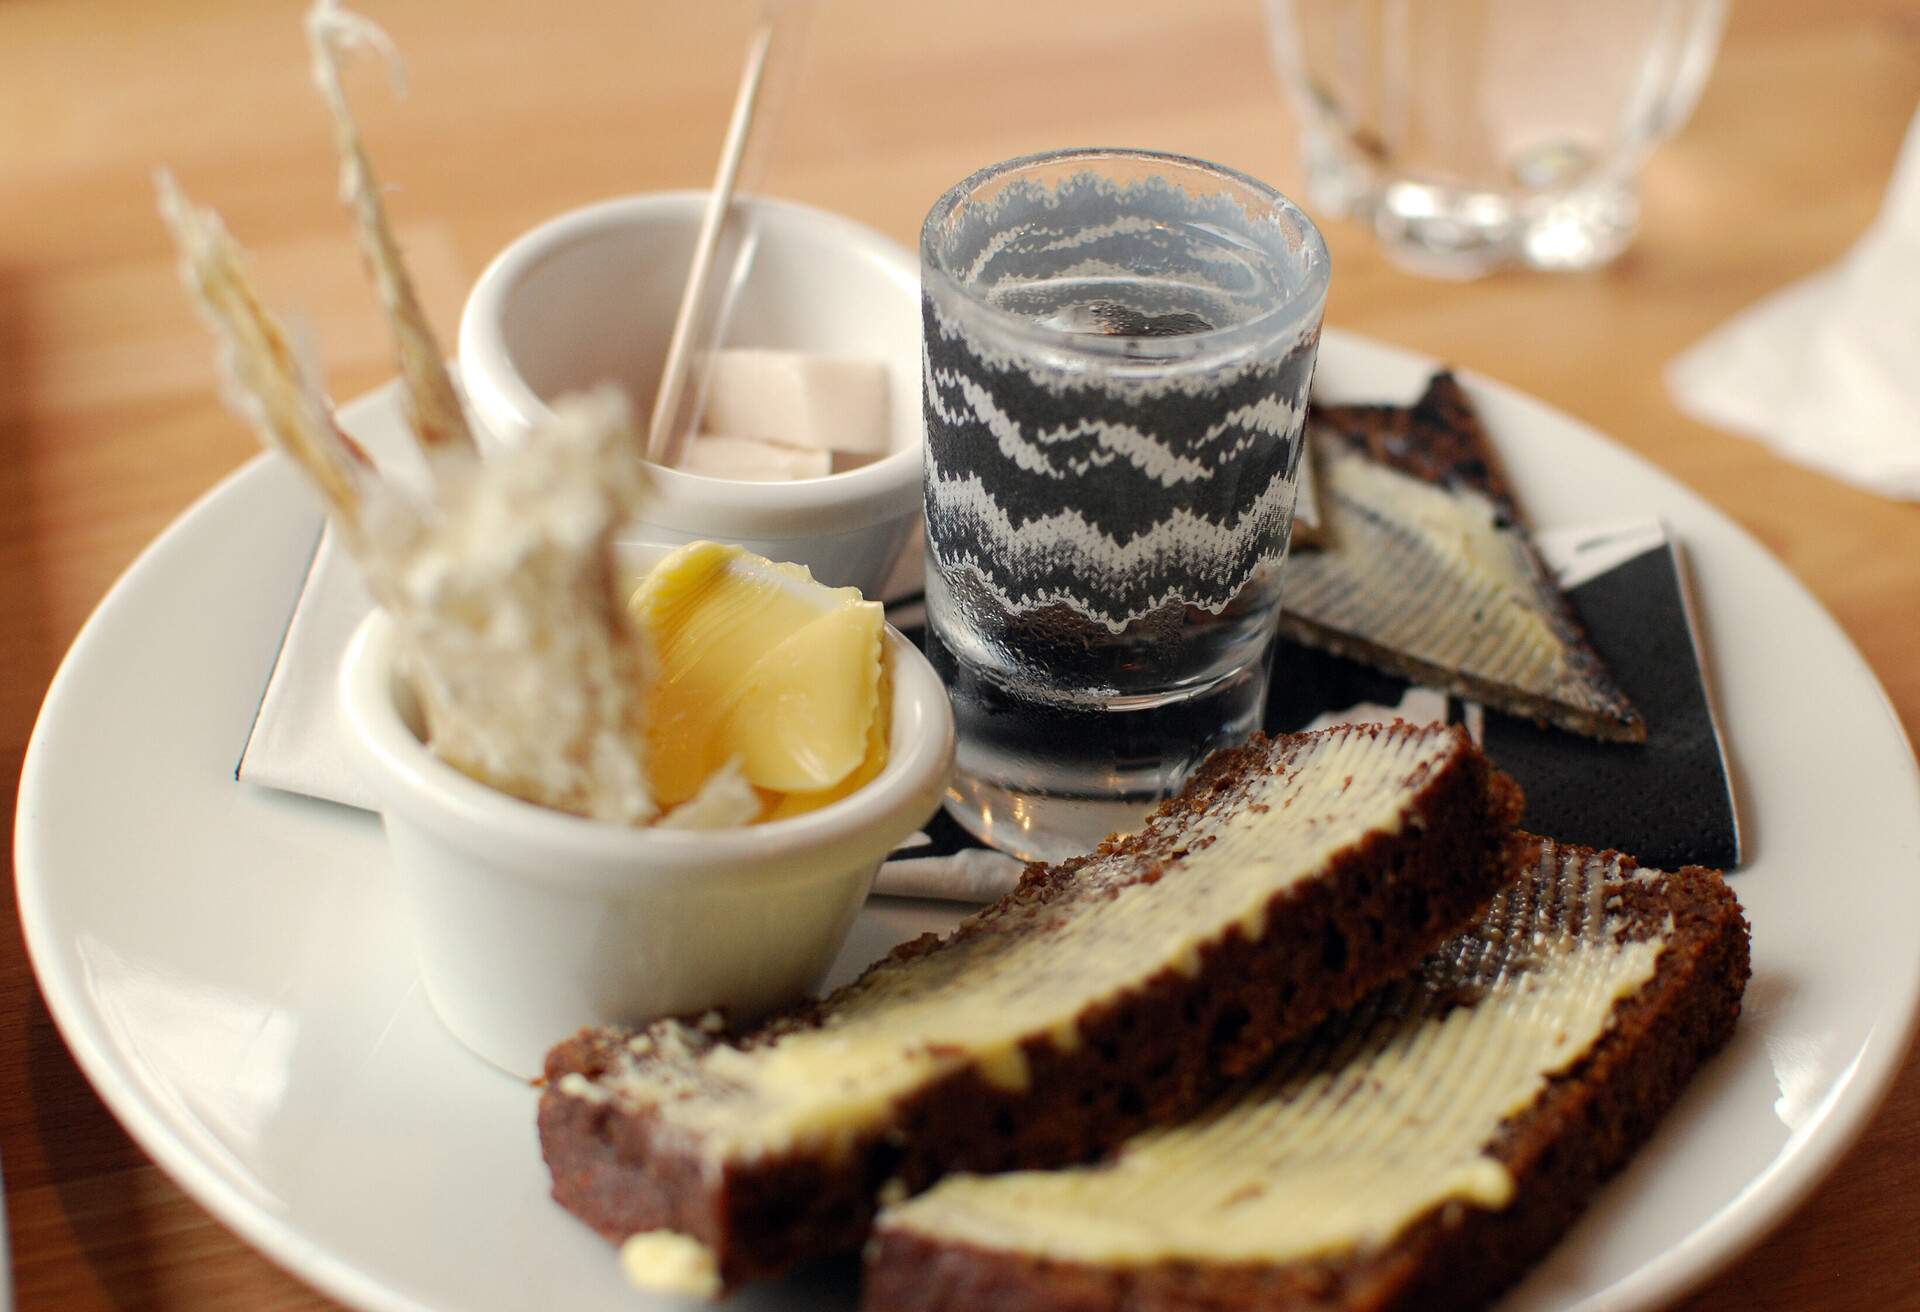 Traditional Icelandic food